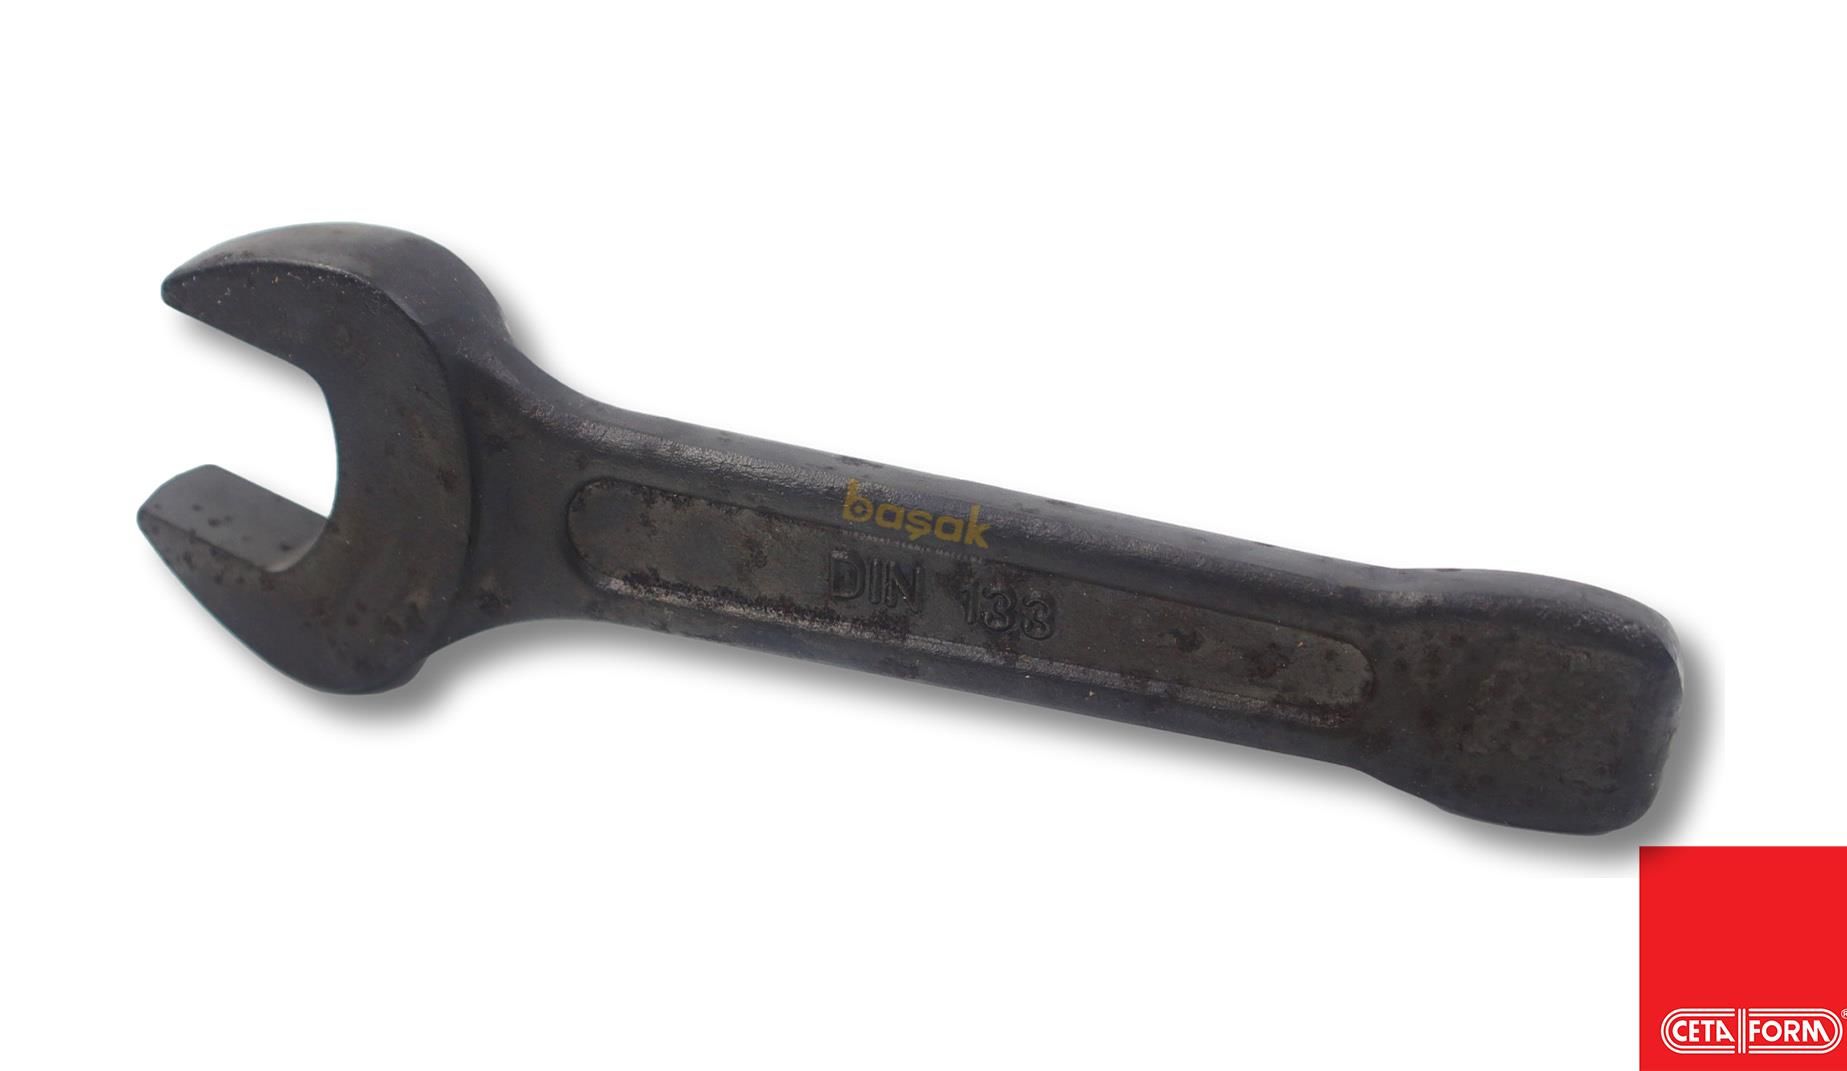 Ceta Form 100 mm Açık Ağız Darbeli (Çakma) Anahtar B23-100